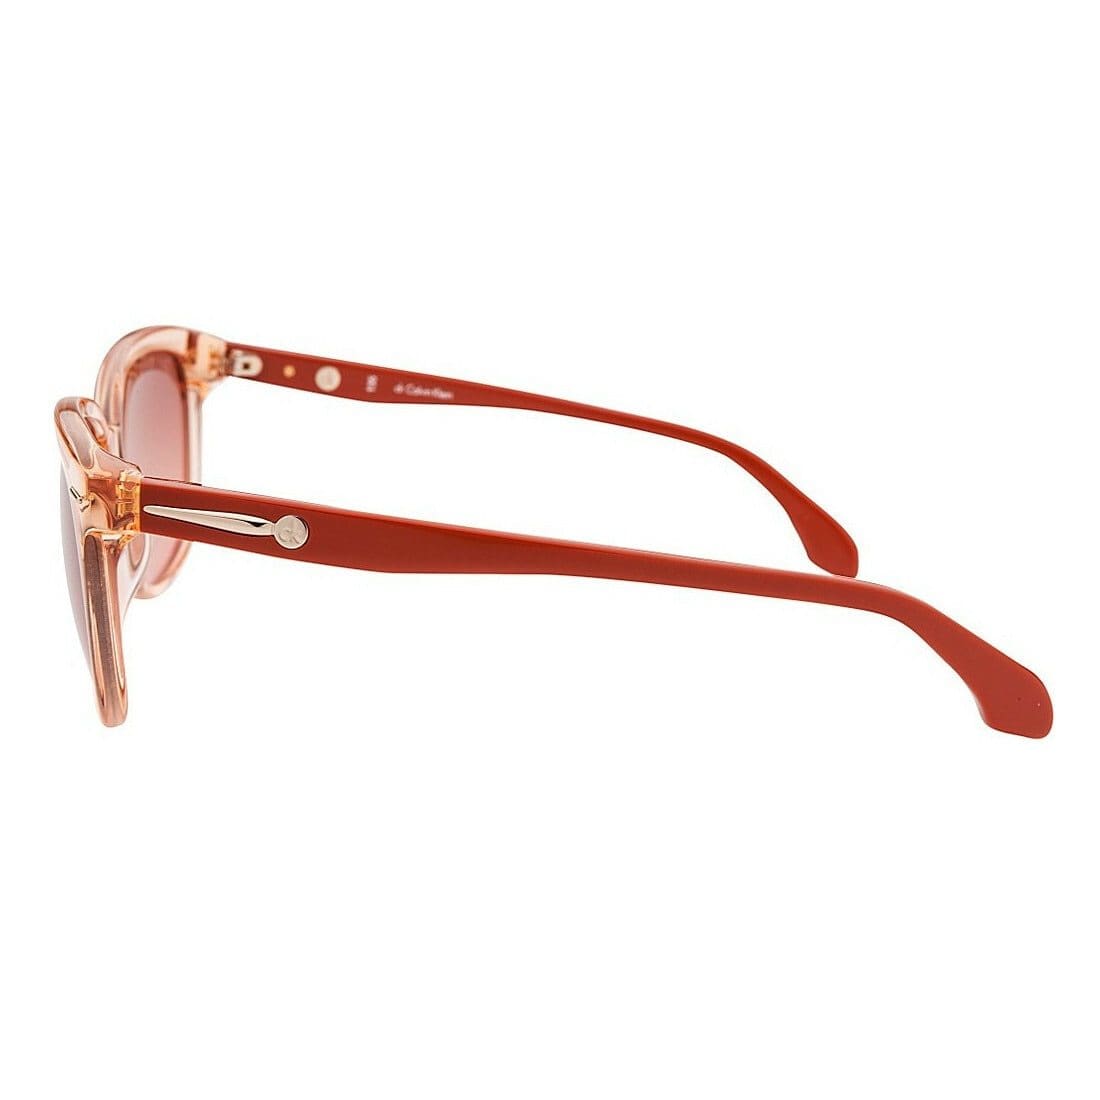 Calvin Klein CK4215S-234 Strawberry Tone Women's Sunglasses Frames 750779068076